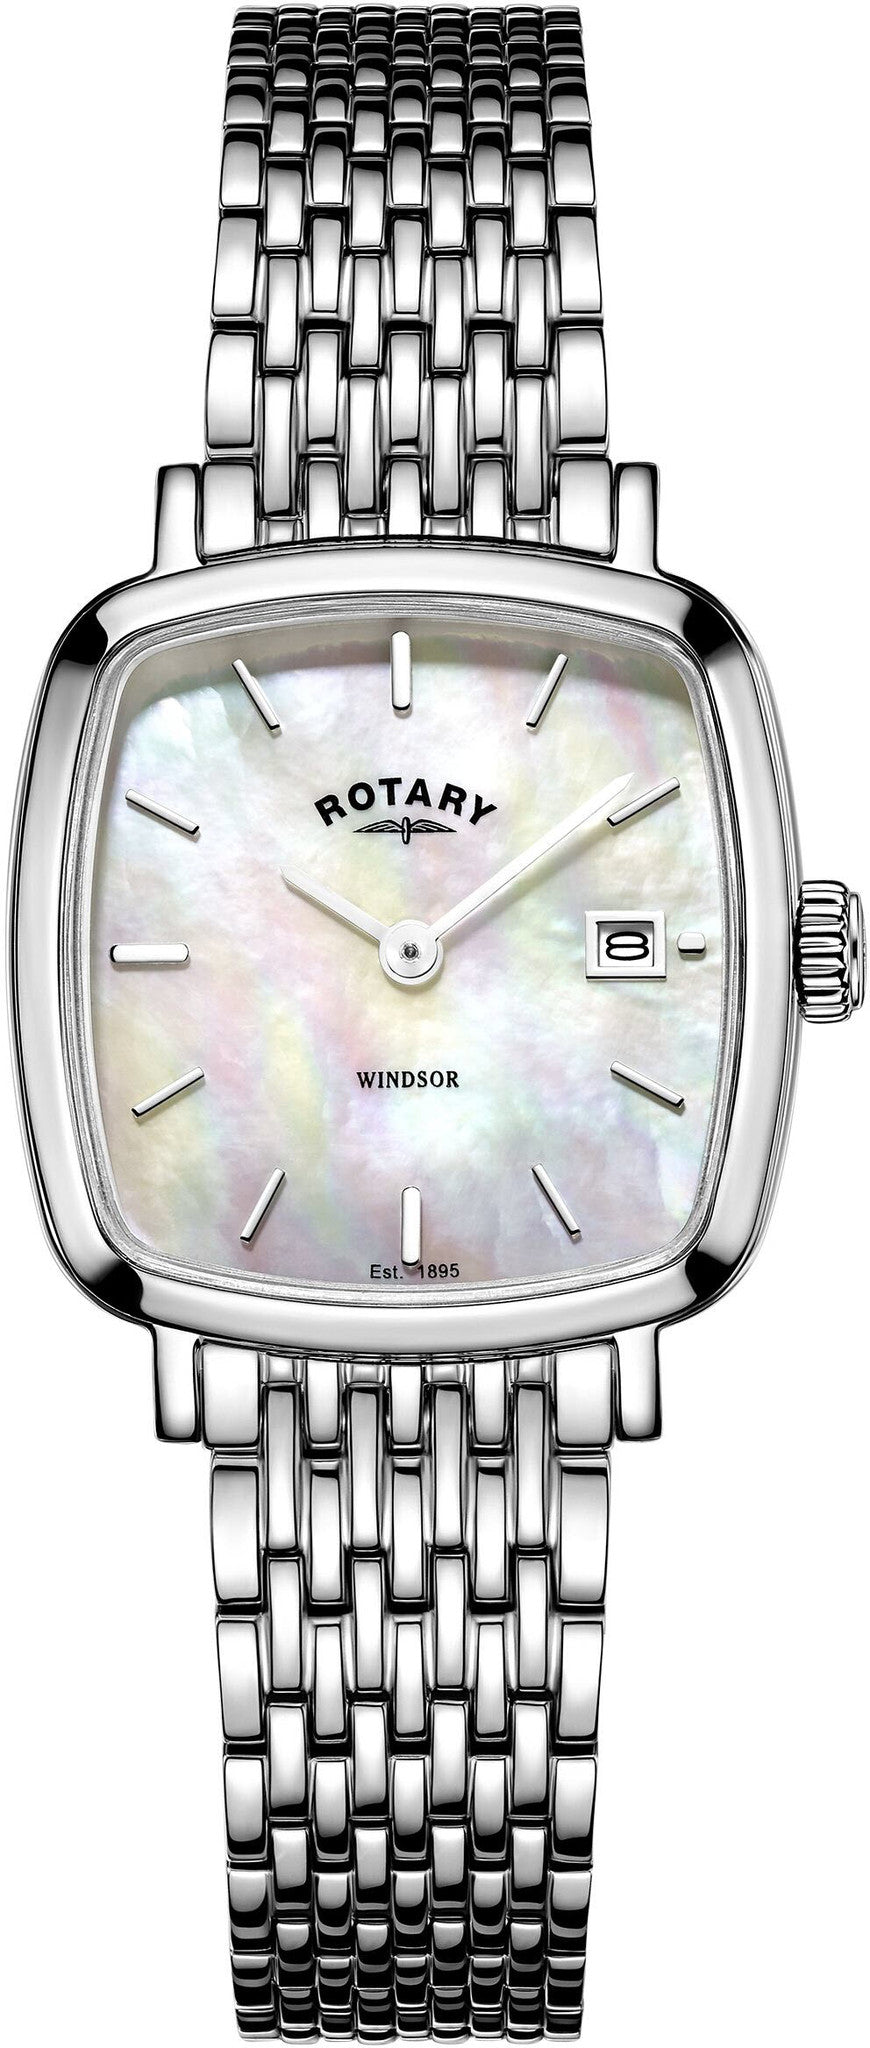 Photos - Wrist Watch Rotary Watch Windsor Cushion Ladies RTY-528 